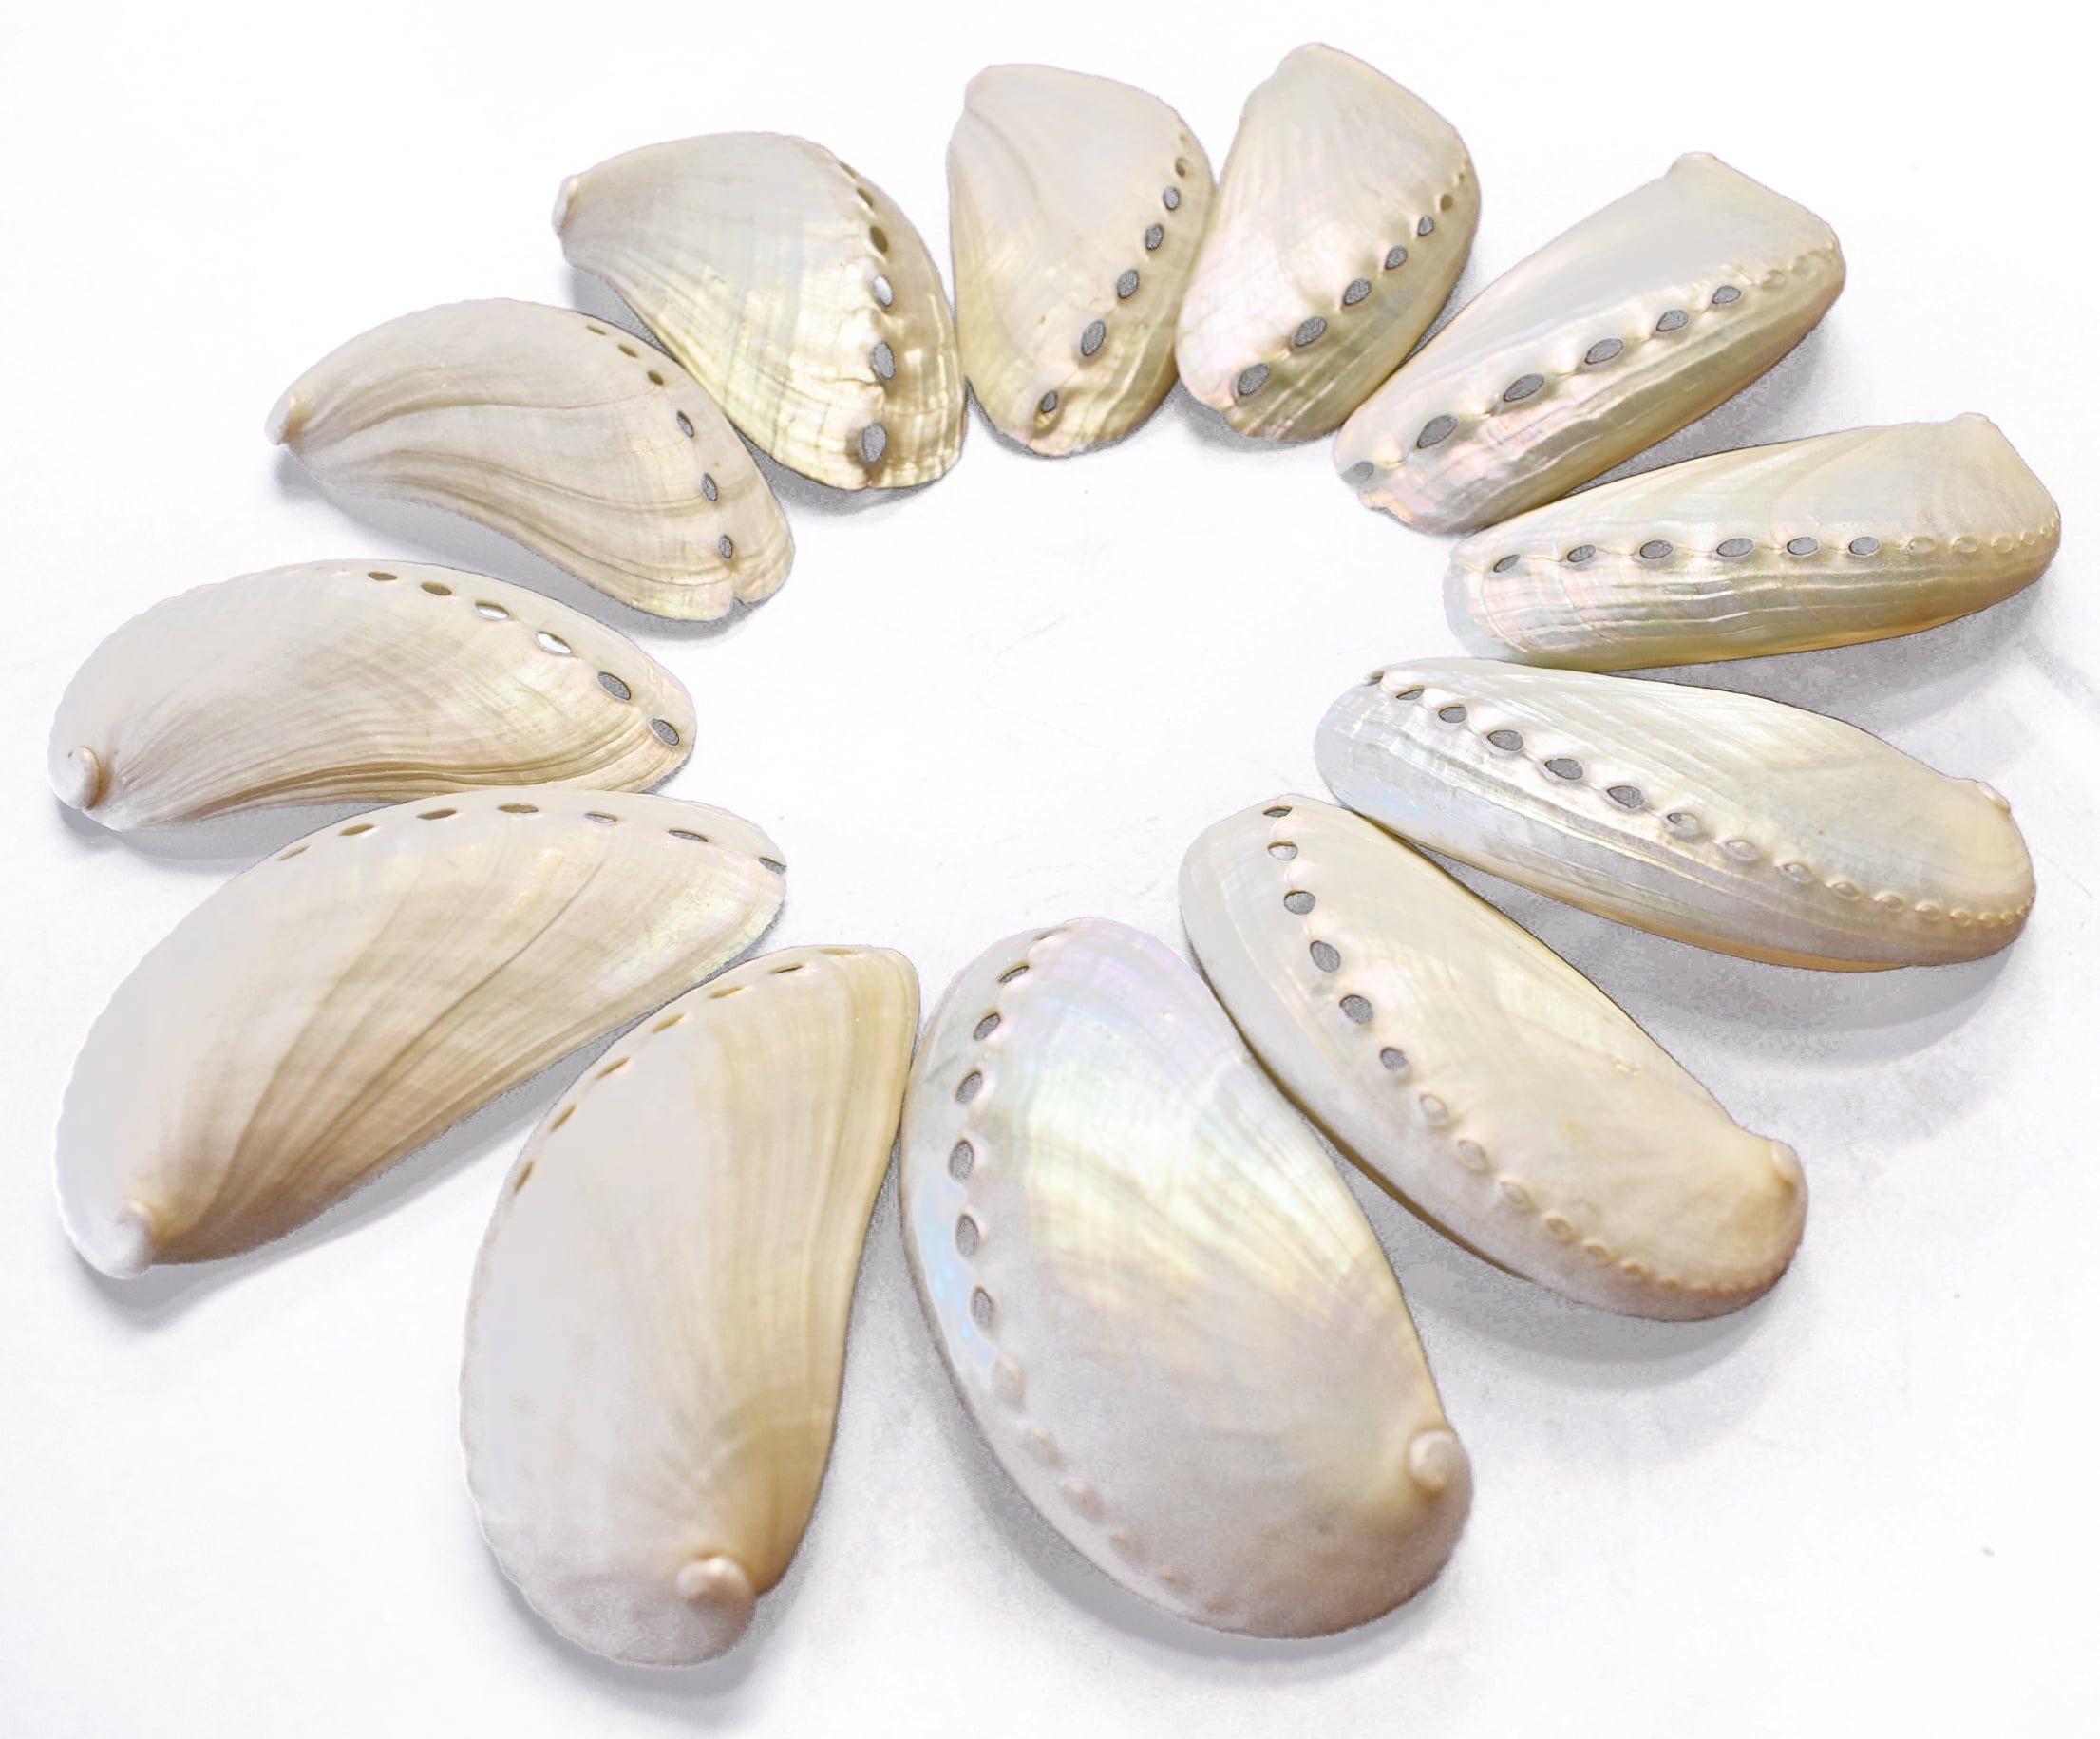 50 Pearl Abalone Shells 1 1/2" To 2" Haliotis Asinina Donkey's Ear Seashells 